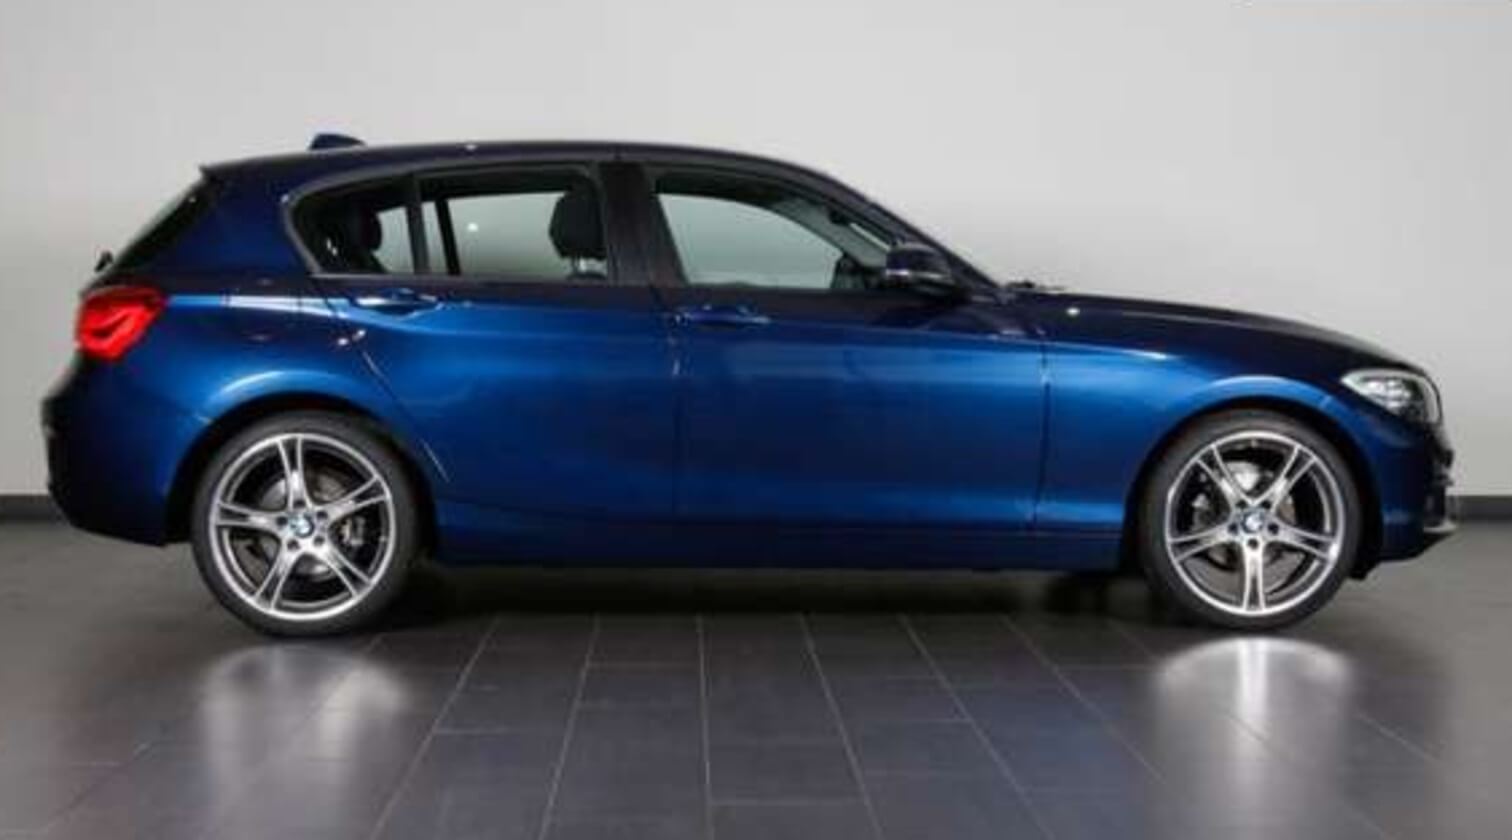 BMW 1 serie f20 lci style 361 styling 361 donkerblauw m performance velgen 19 inch